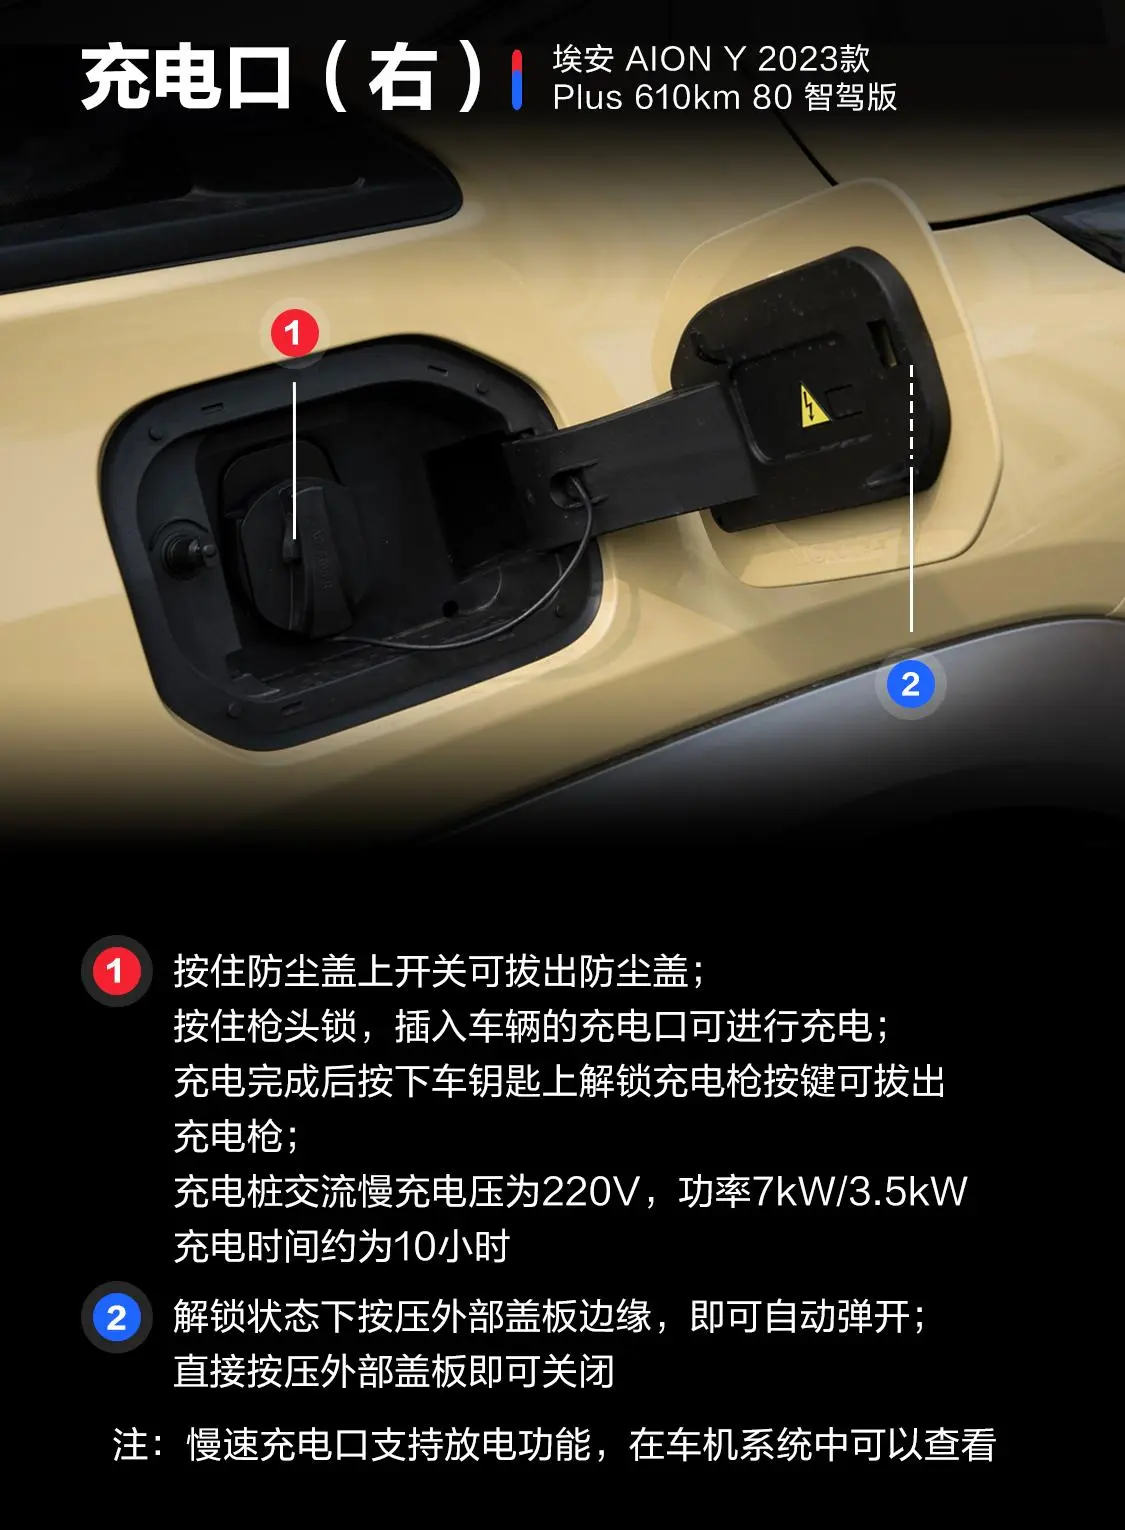 AION YPlus 610km 80 智驾版